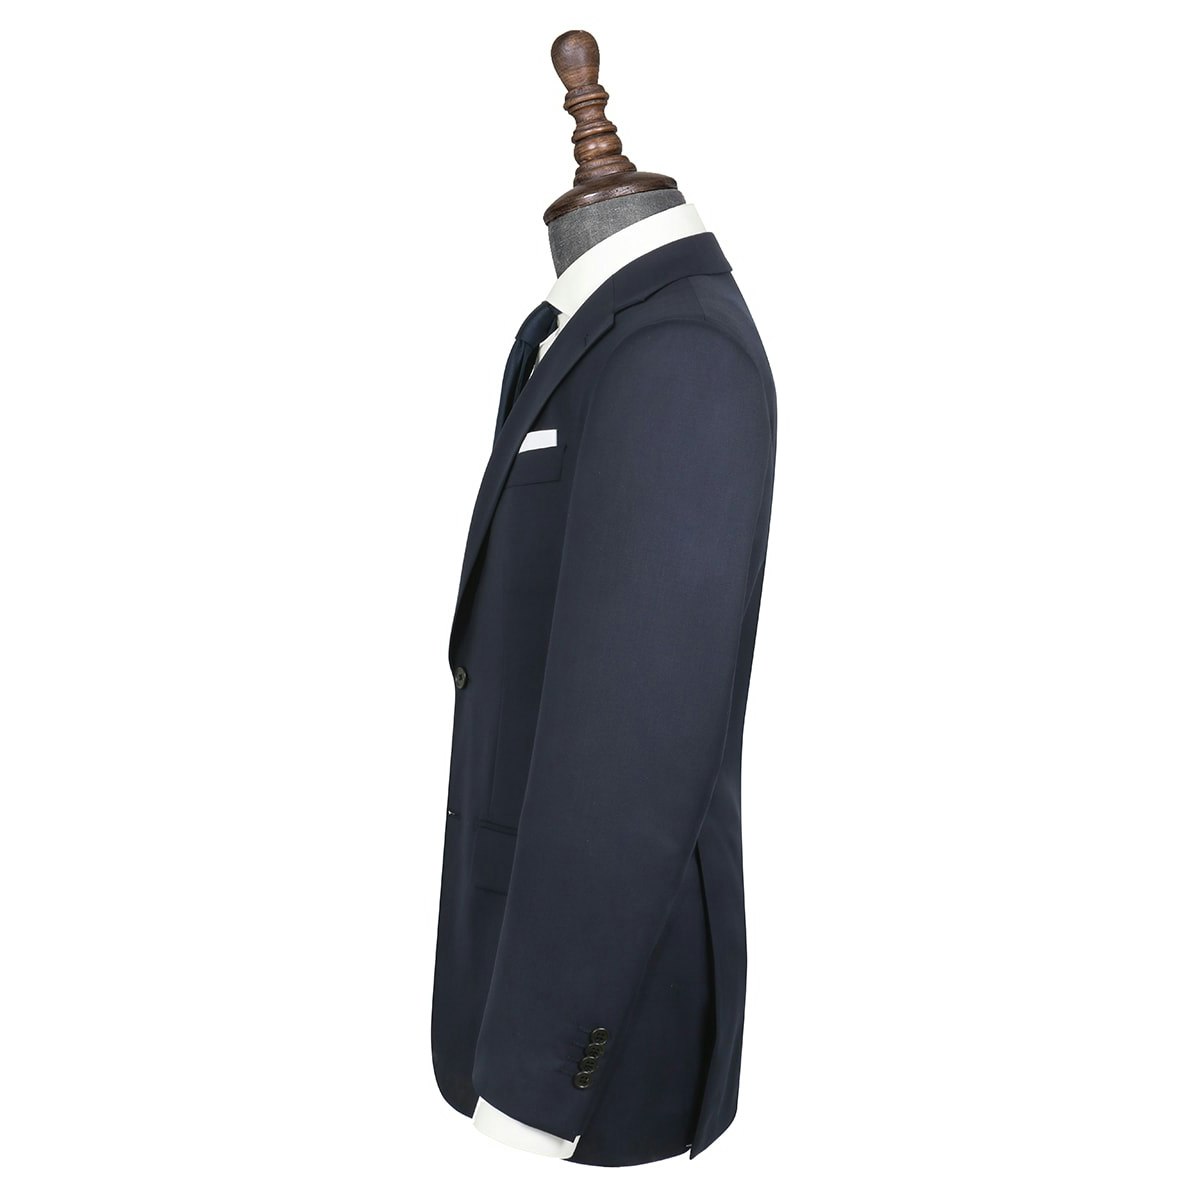 InStitchu Collection Crompton Navy Wool Jacket